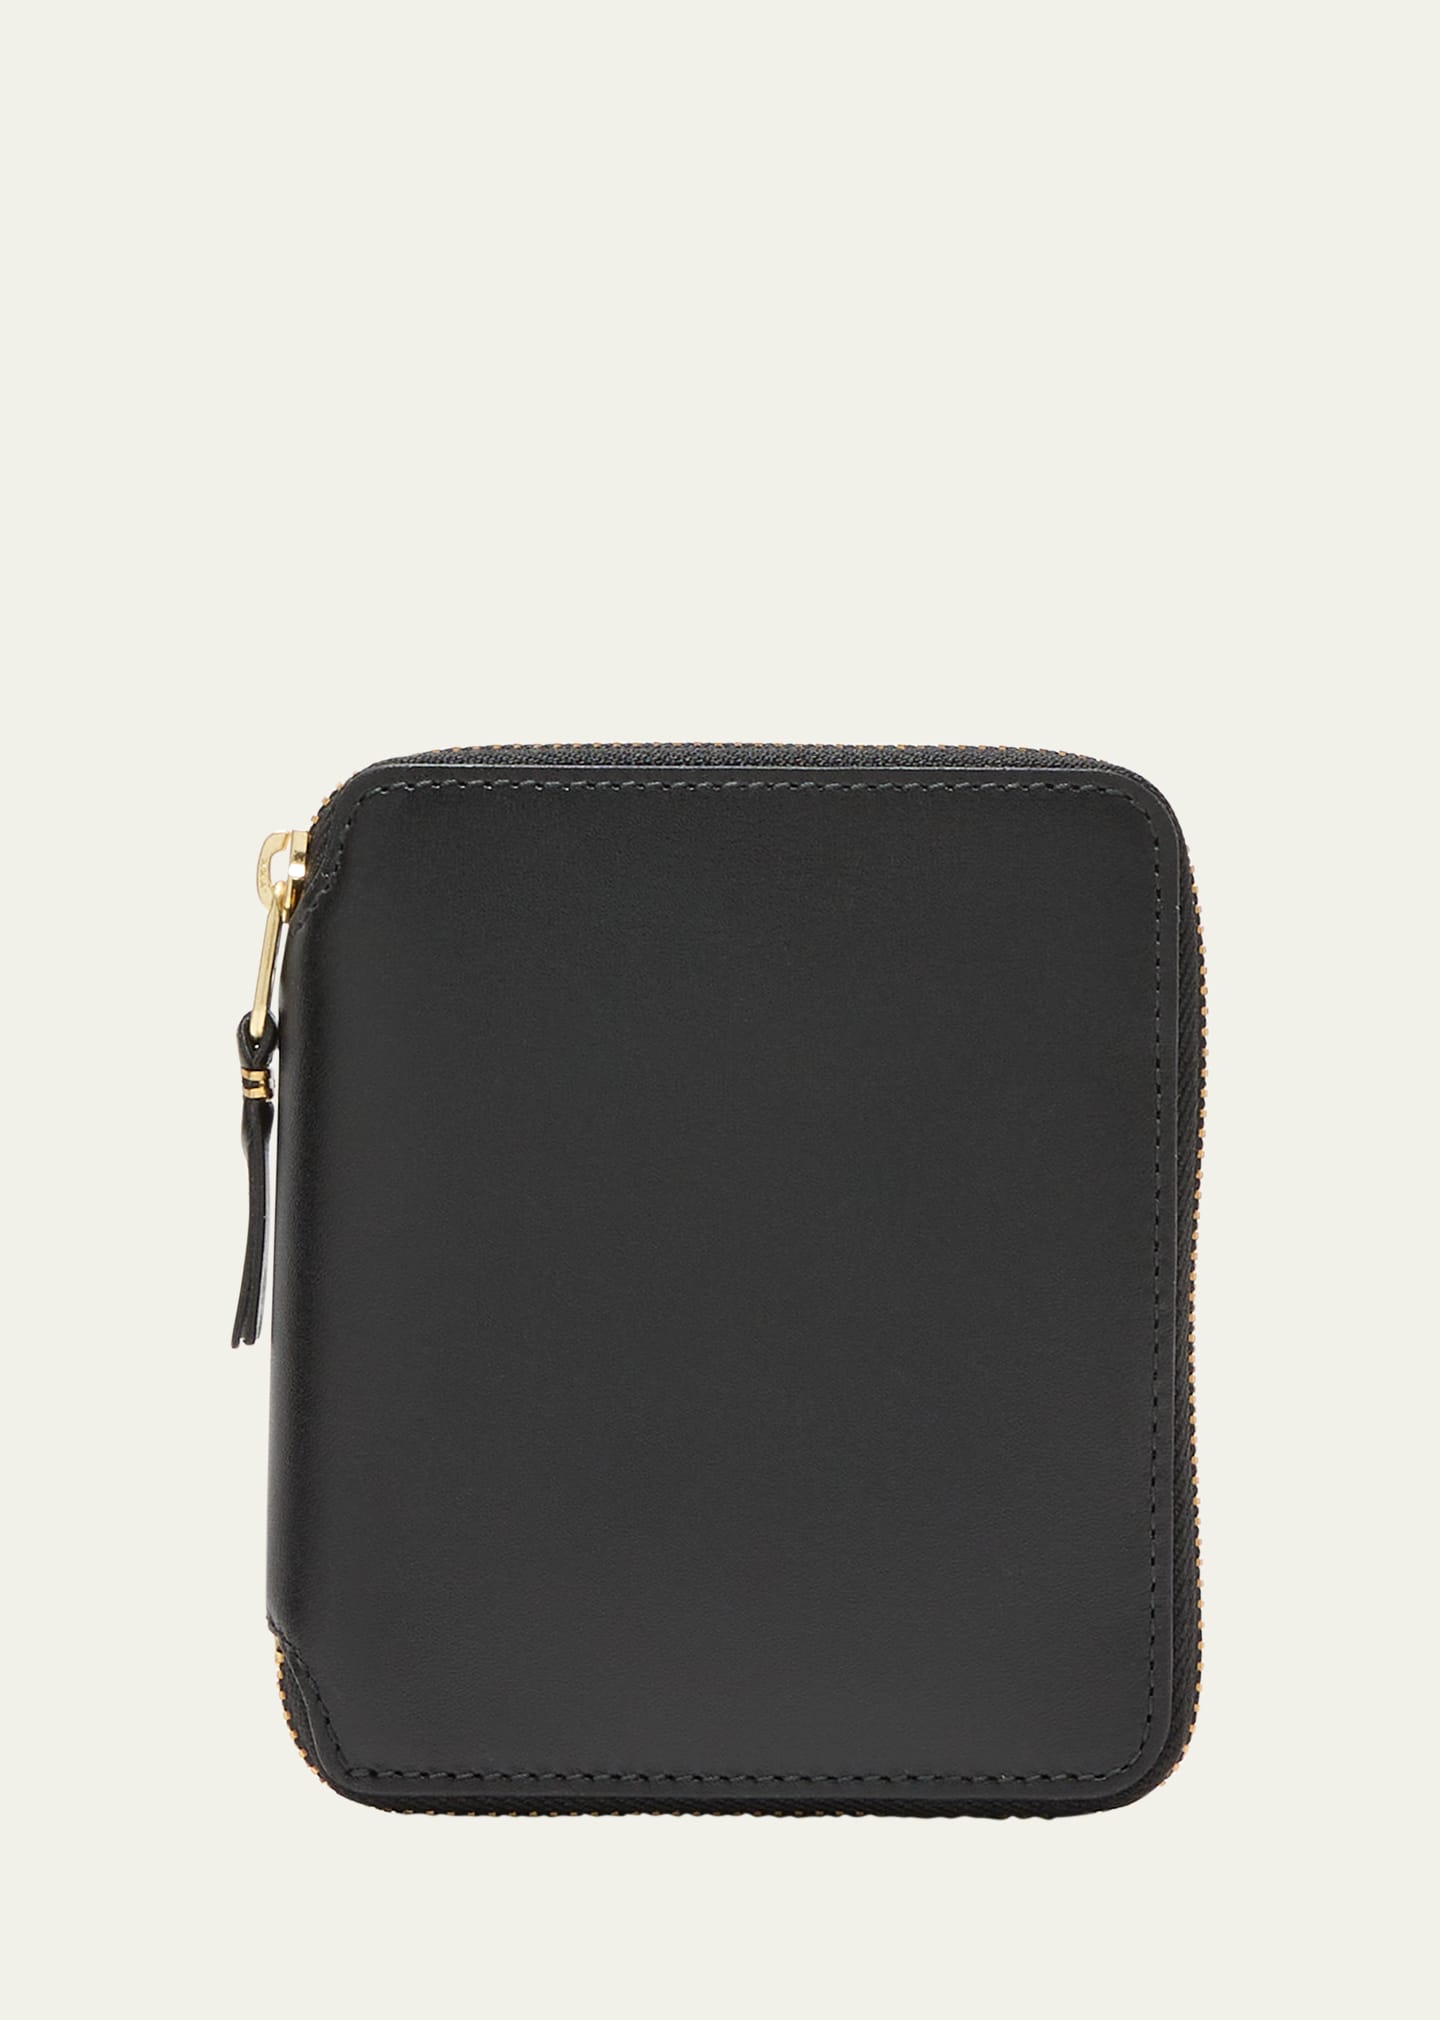 Comme Des Garçons Men's Classic Leather Zip Wallet In Black